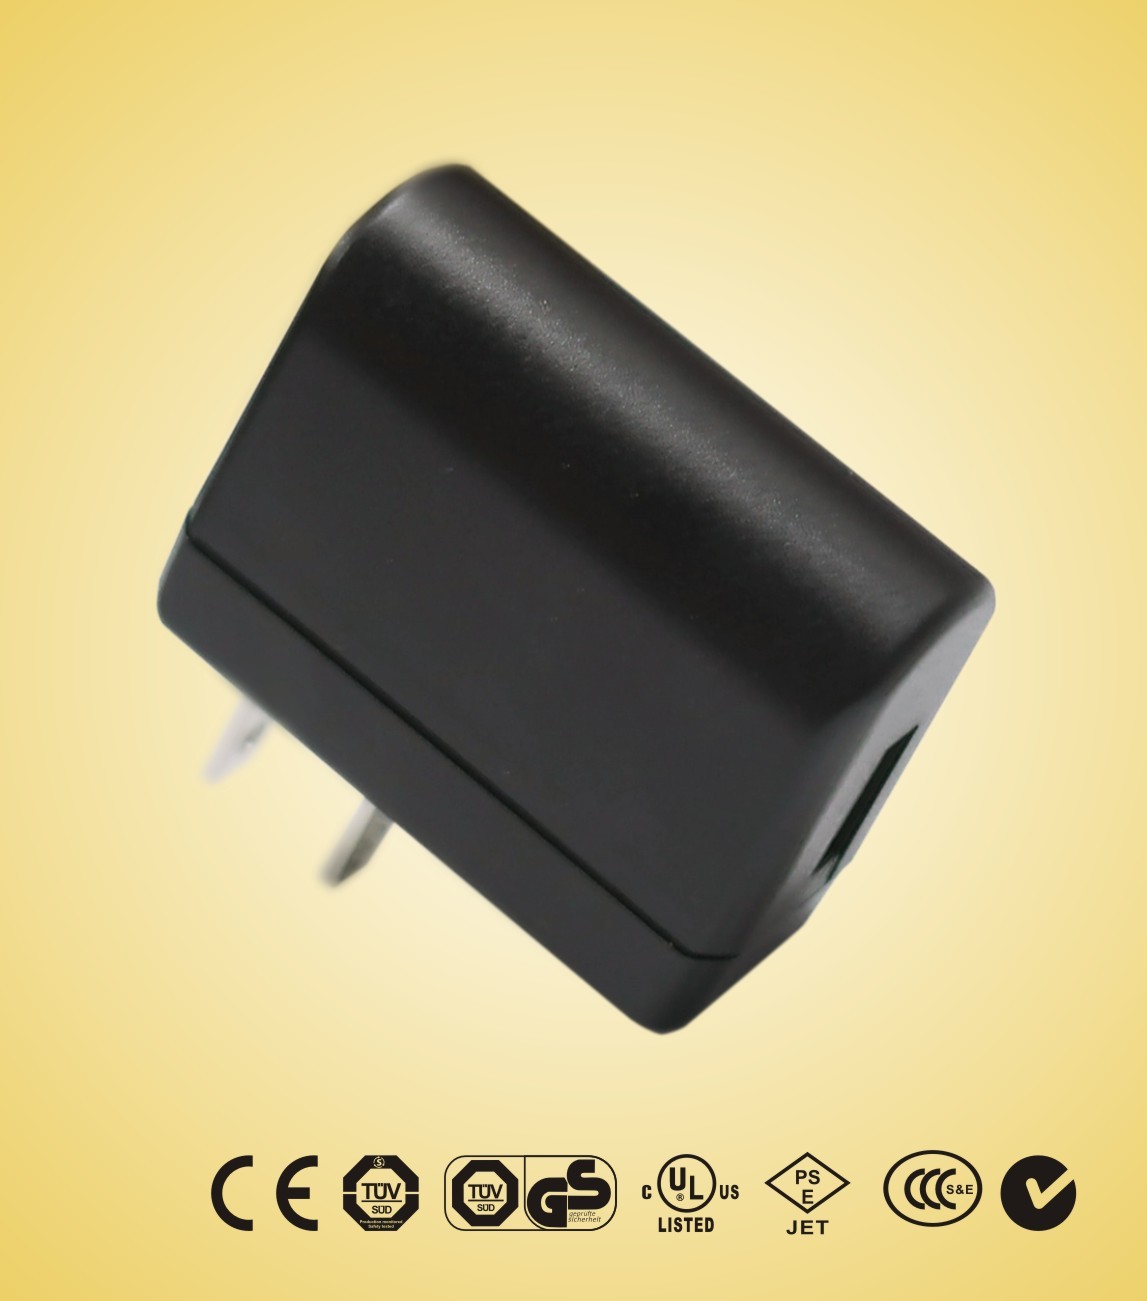 Green Power Supply 3.5W 120V AC Uniwersalny USB Power Adapter Dla set-top-box, ADSL, ładowarka